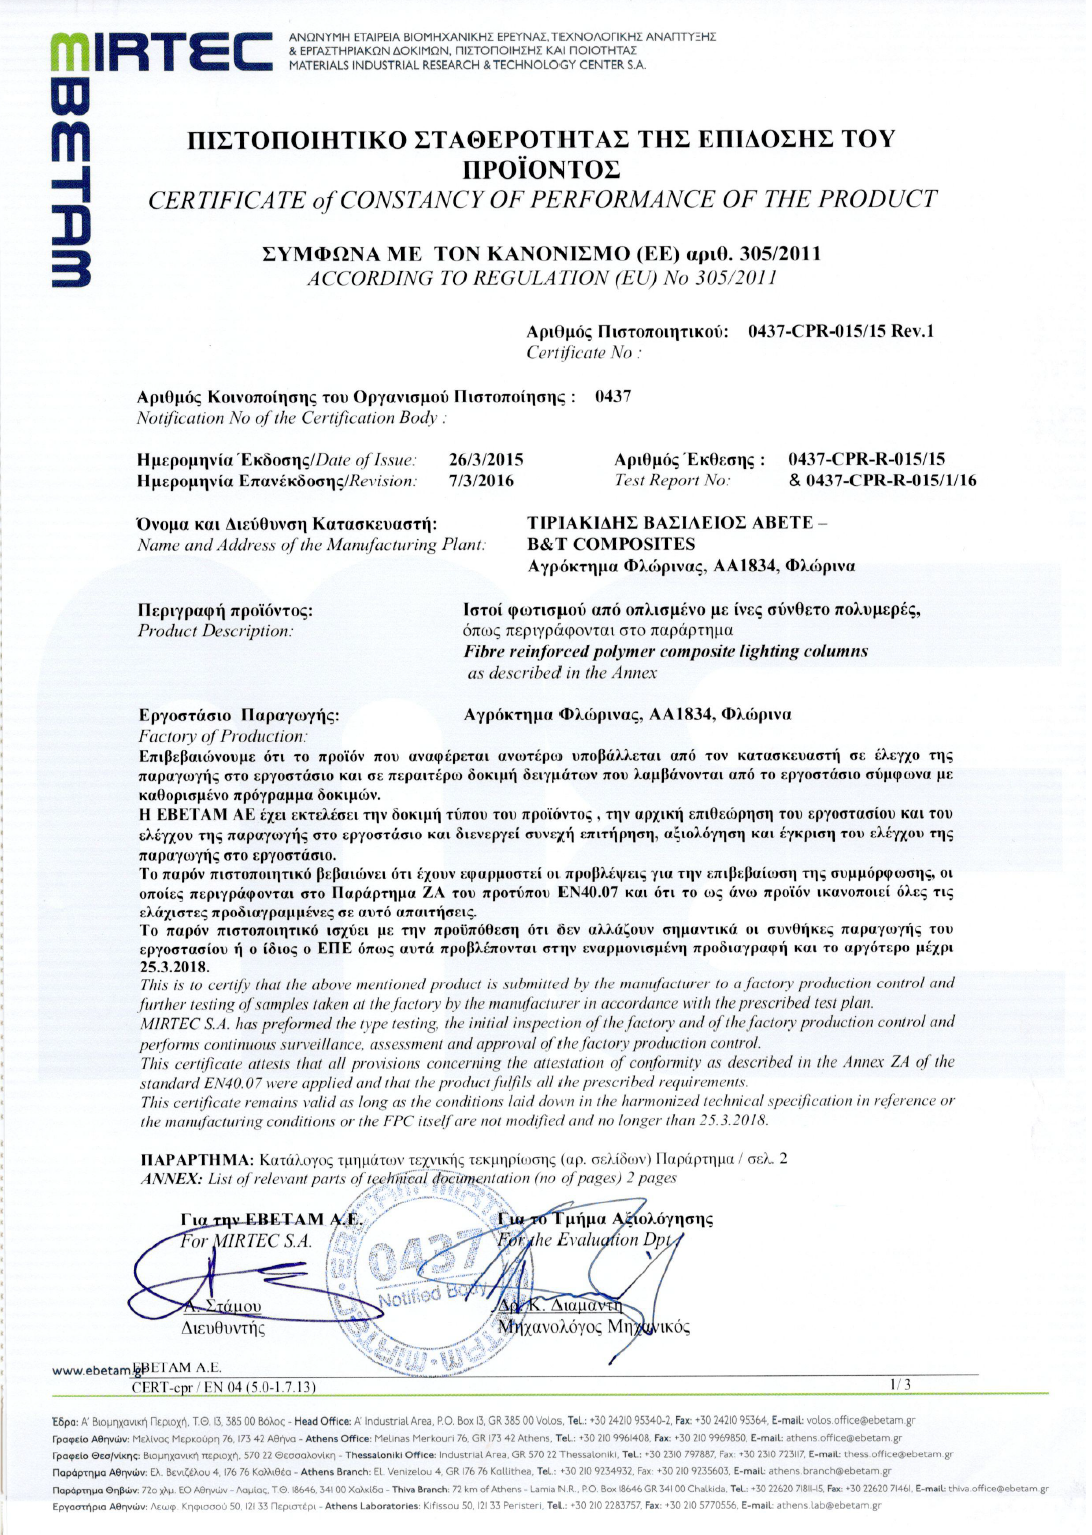 Certificate of Constancy of Performance